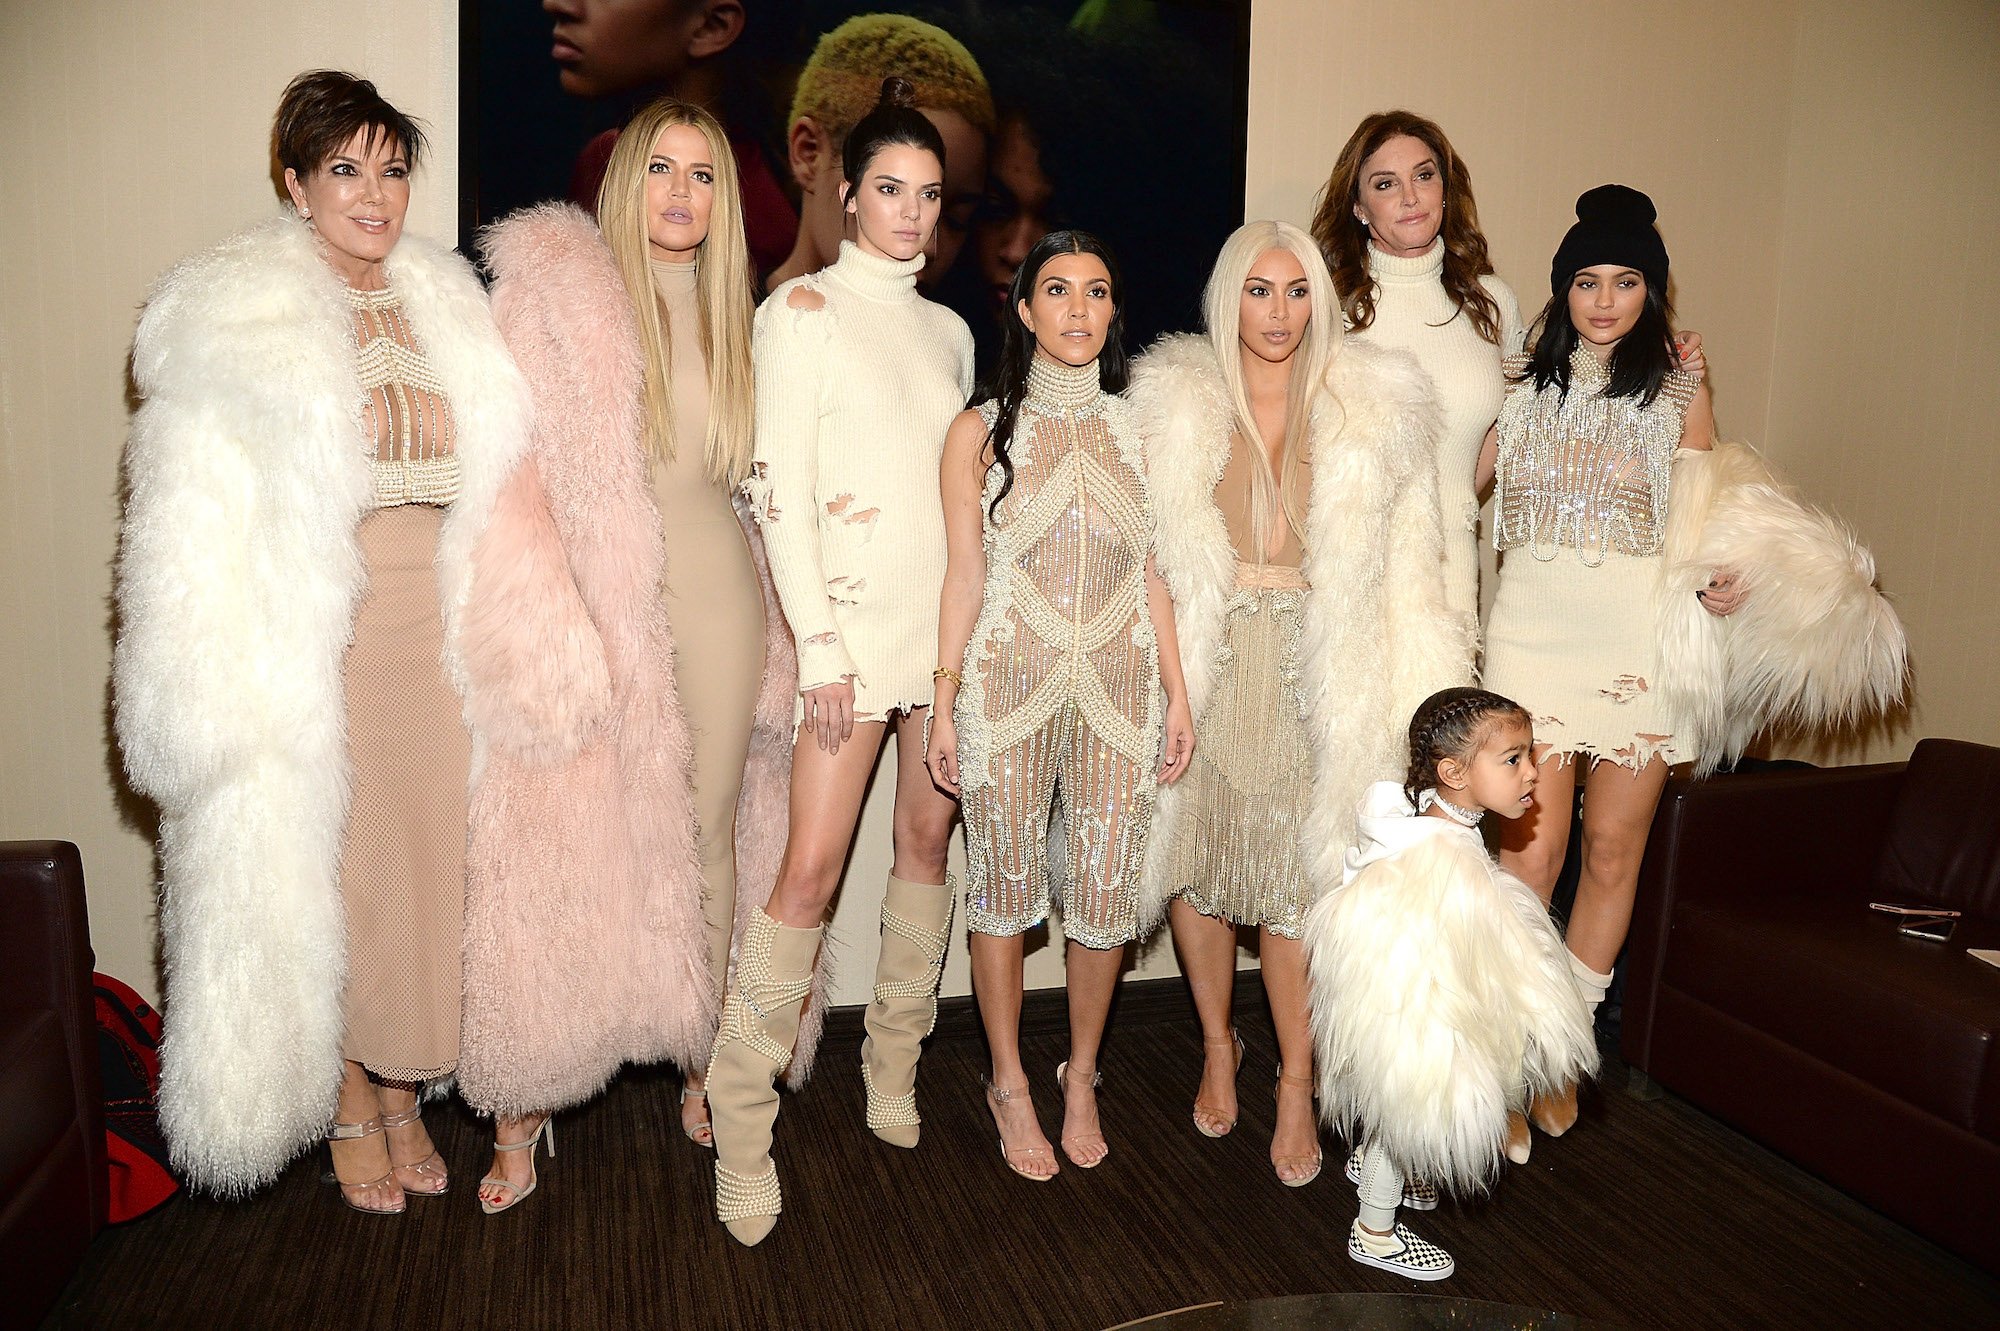 Kardashian-Jenner family